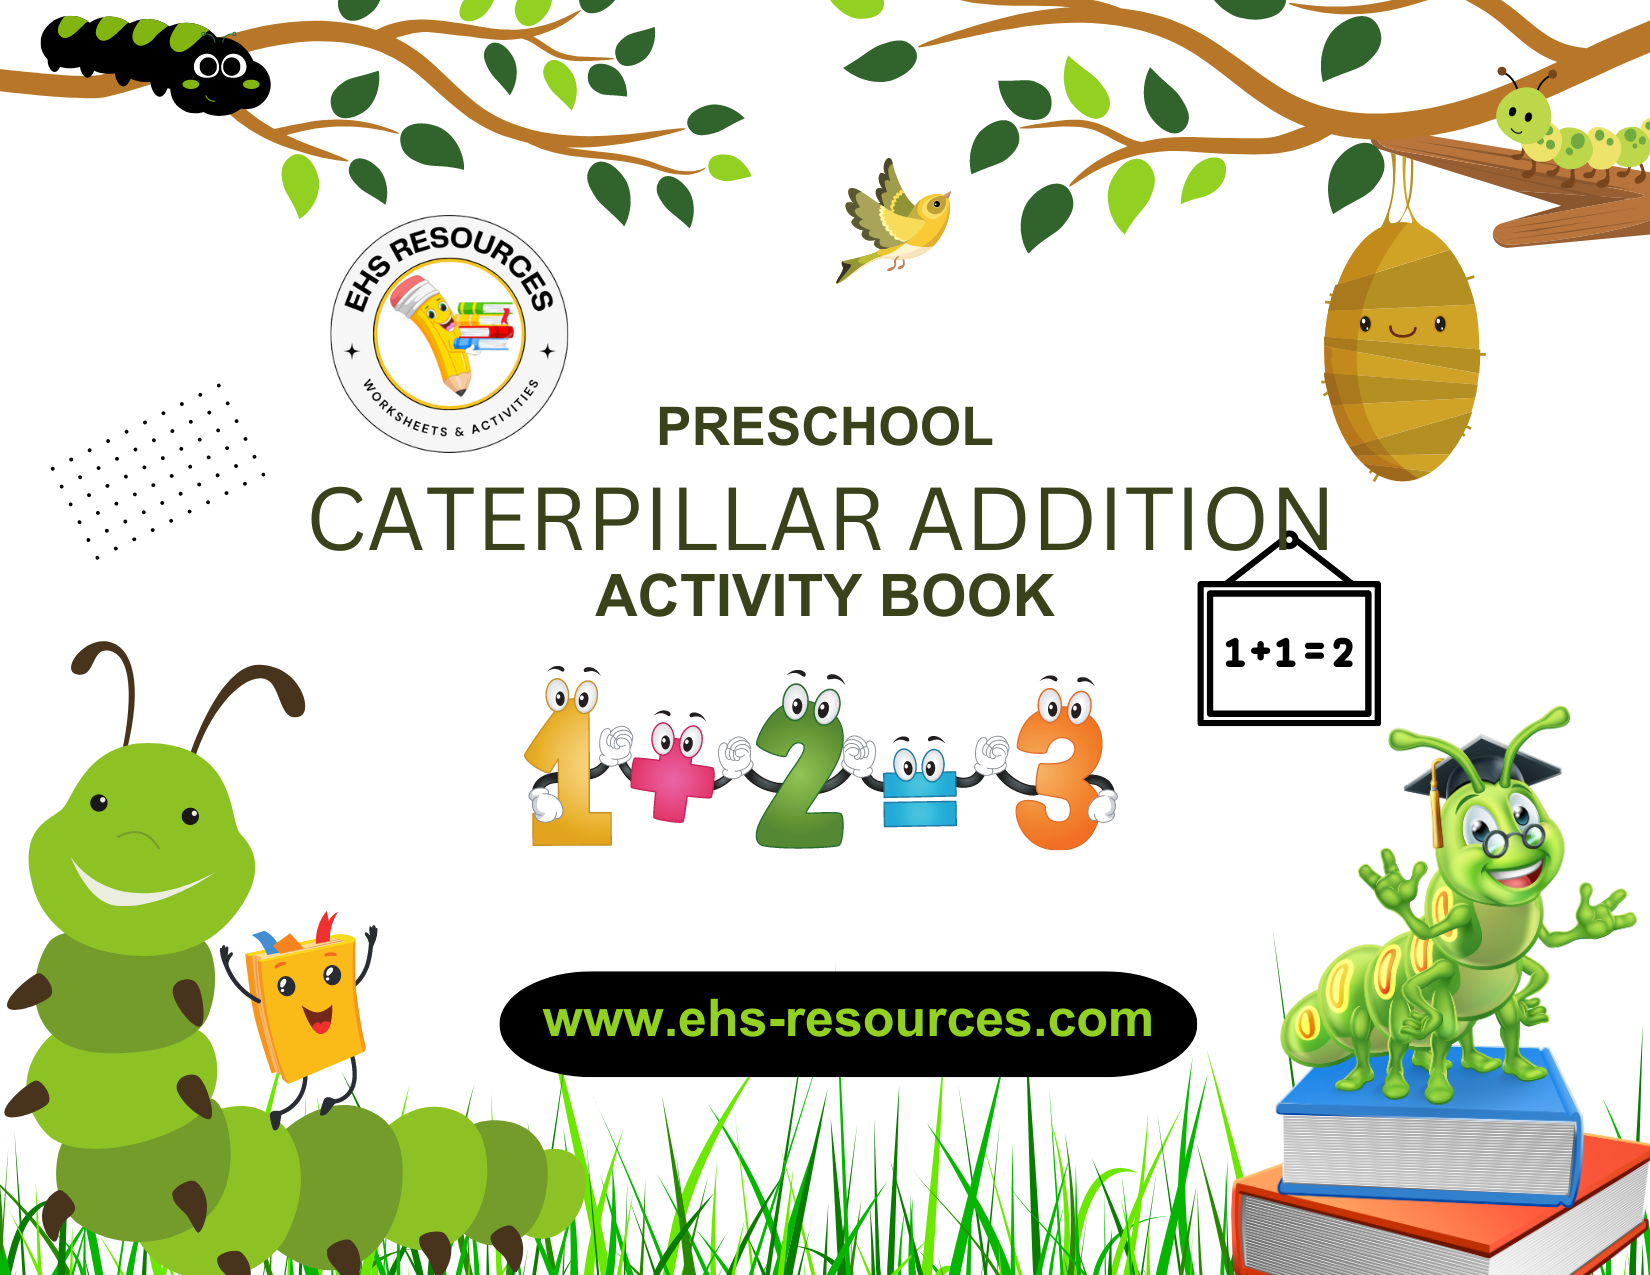 Caterpillar Addition Book For Preschool